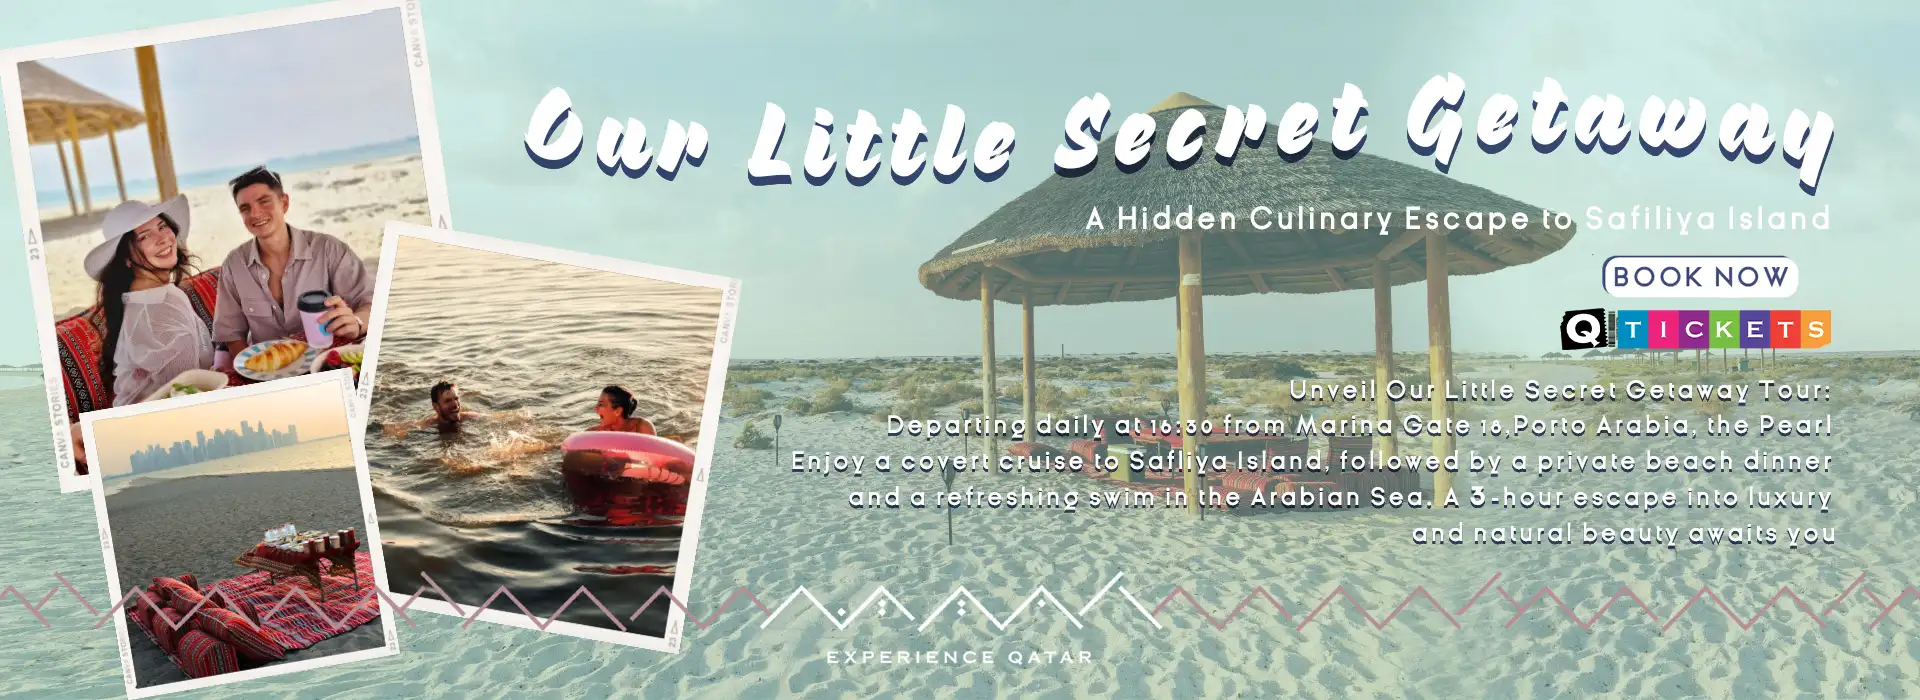 Our Little Secret Getaway